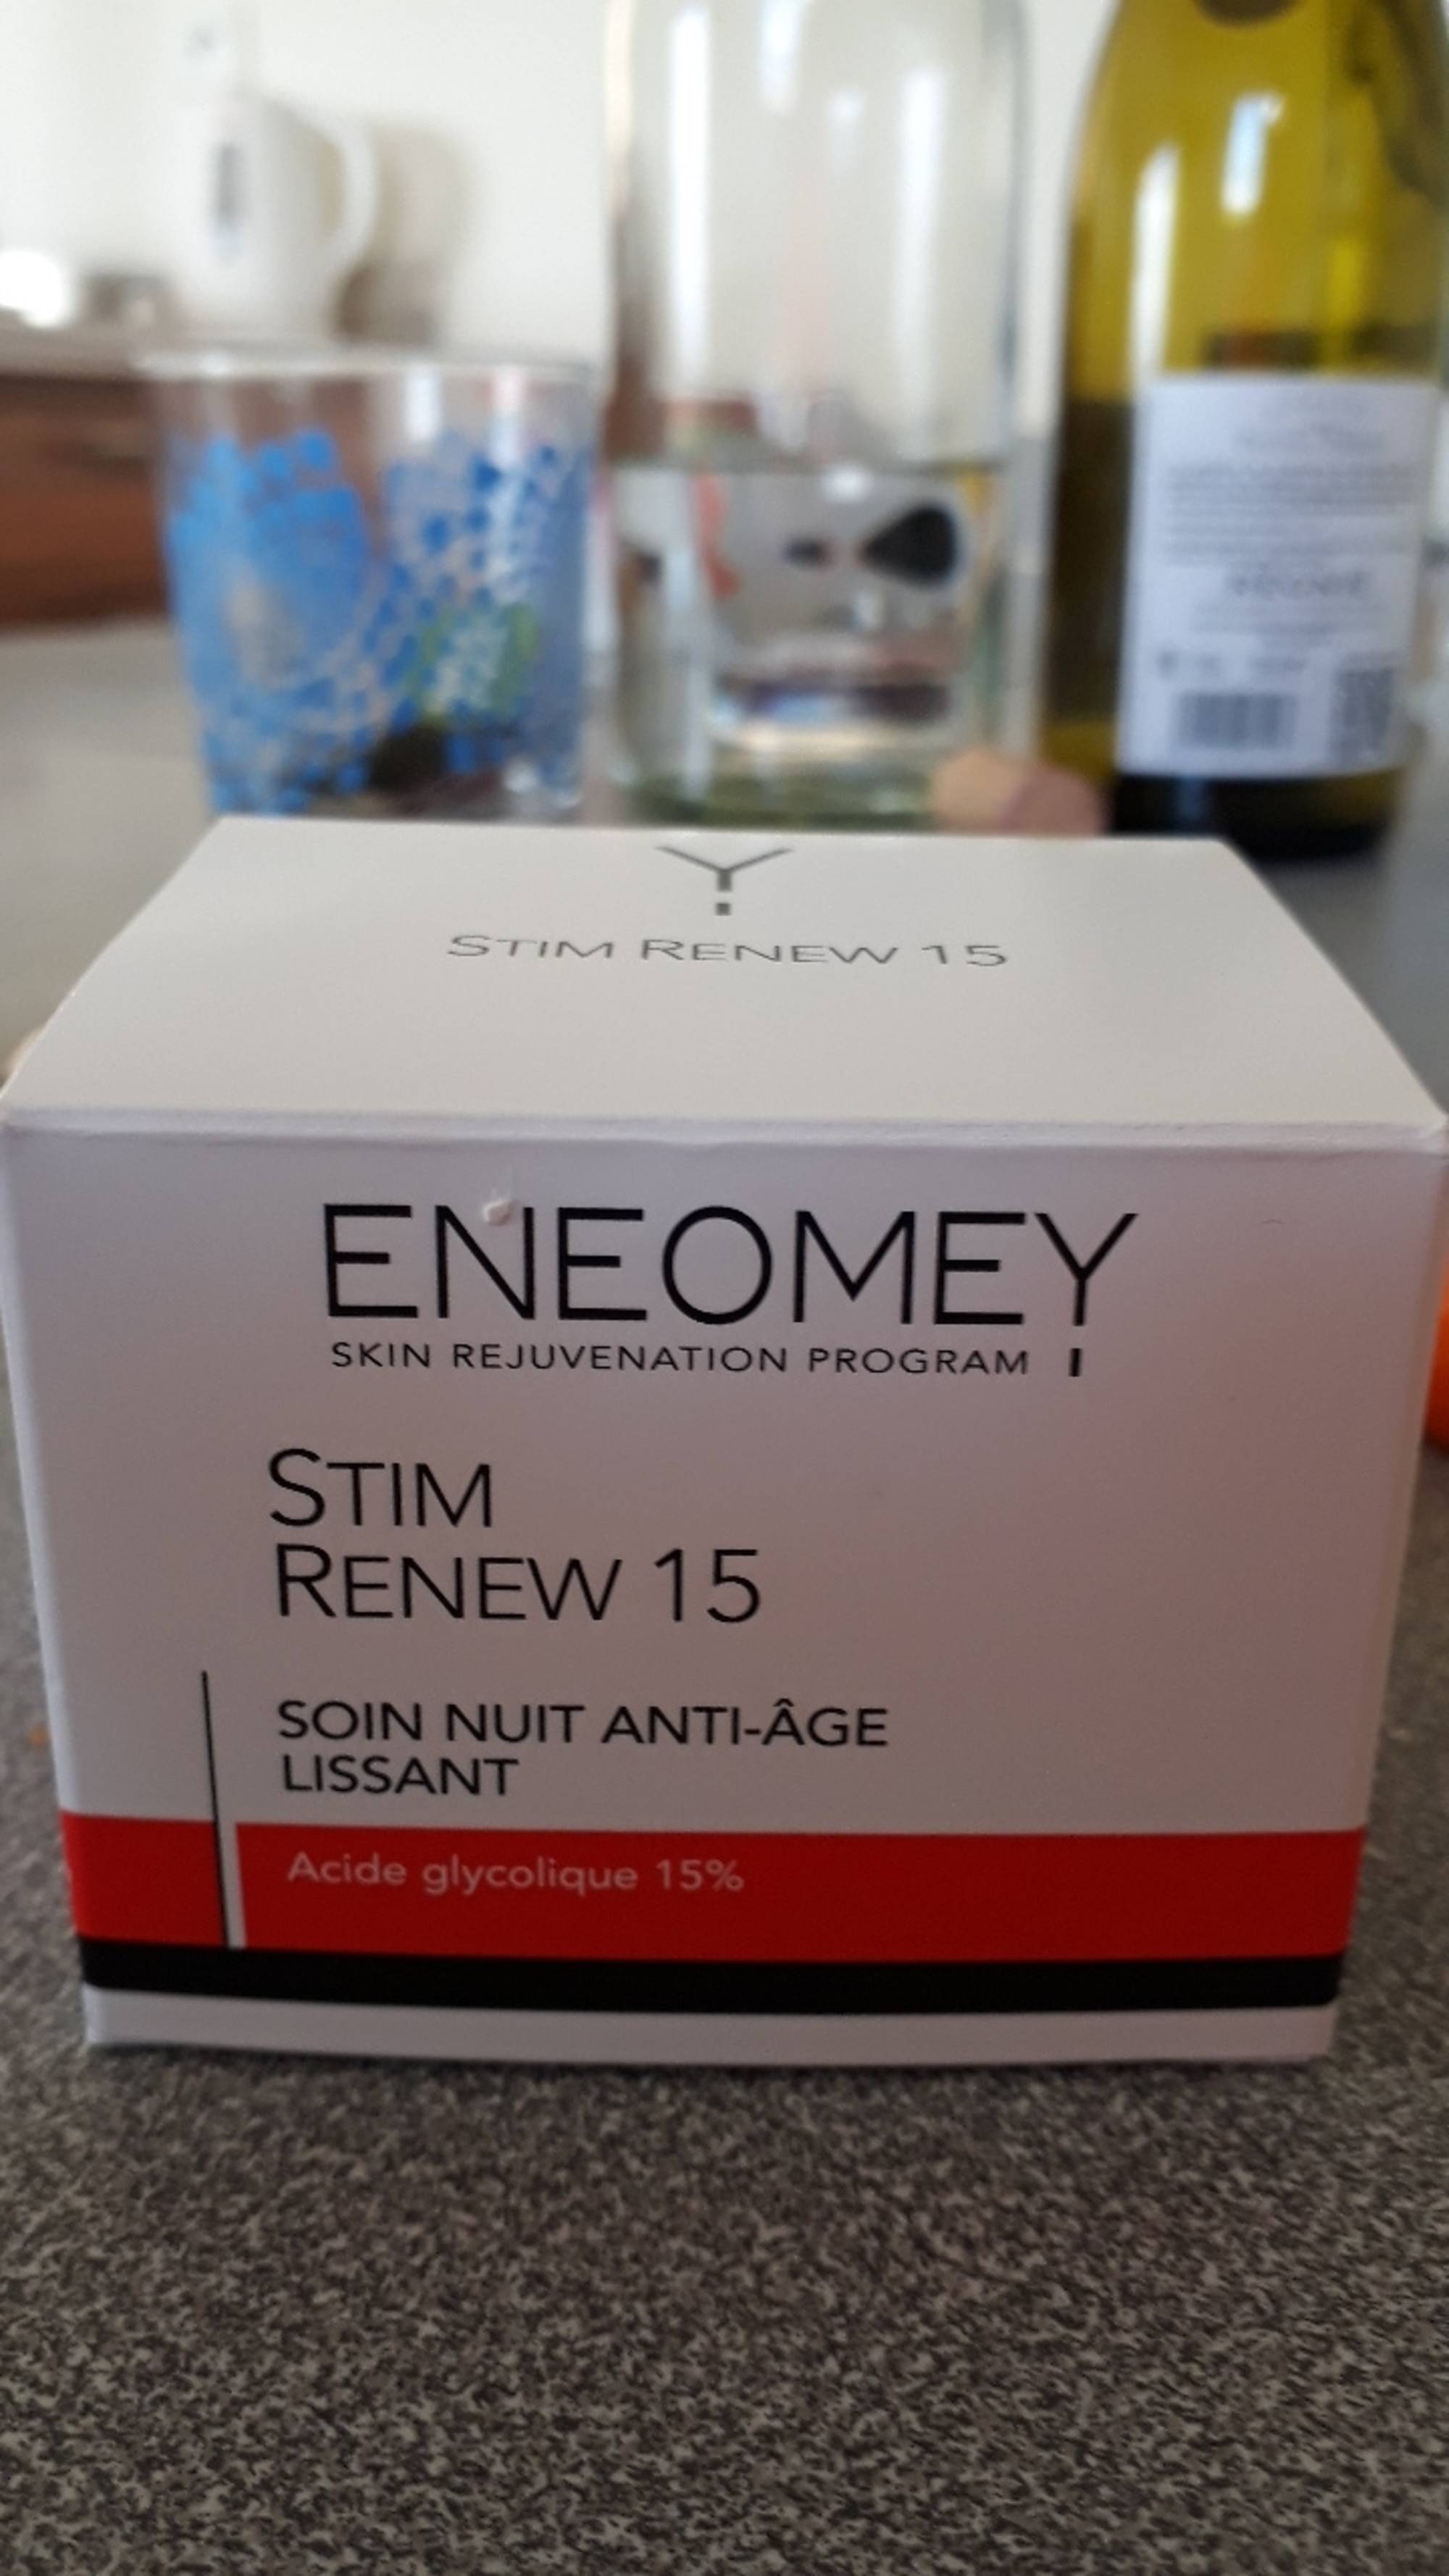 ENEOMEY - Stim renew 15 - Soin nuit anti-âge lissant